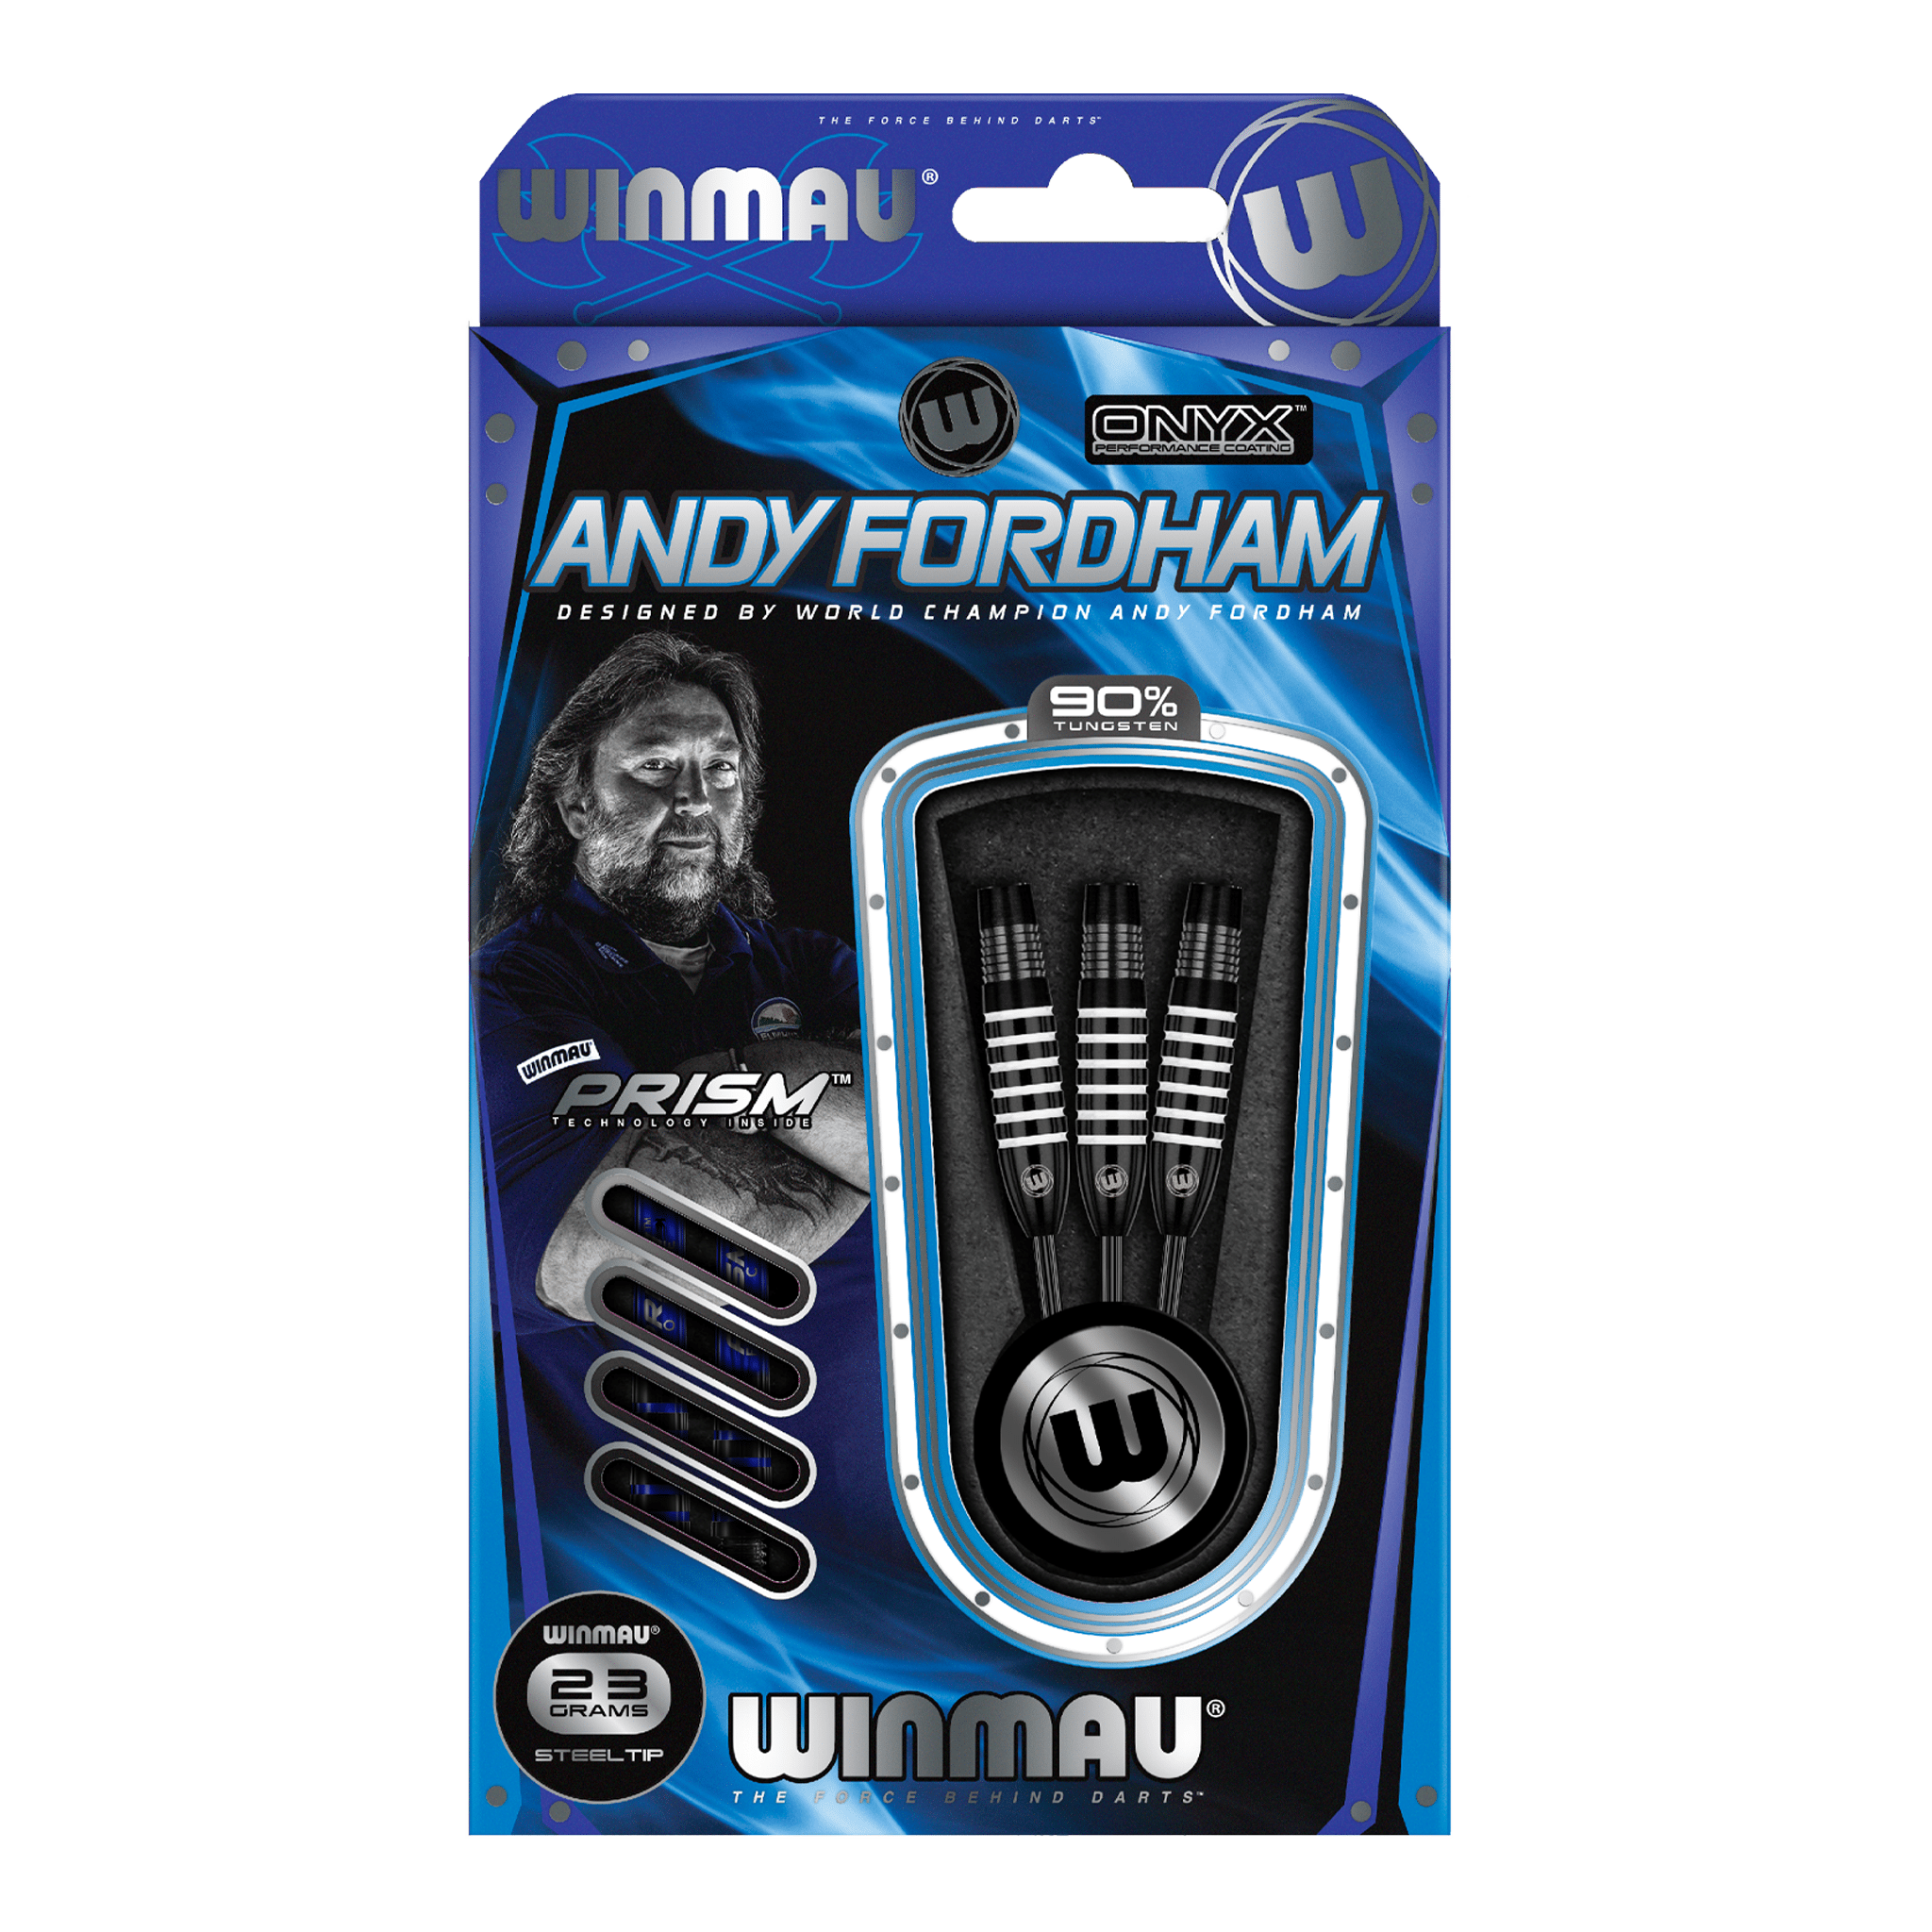 Winmau Andy Fordham - 90% Tungsten Steel Tip Darts Darts